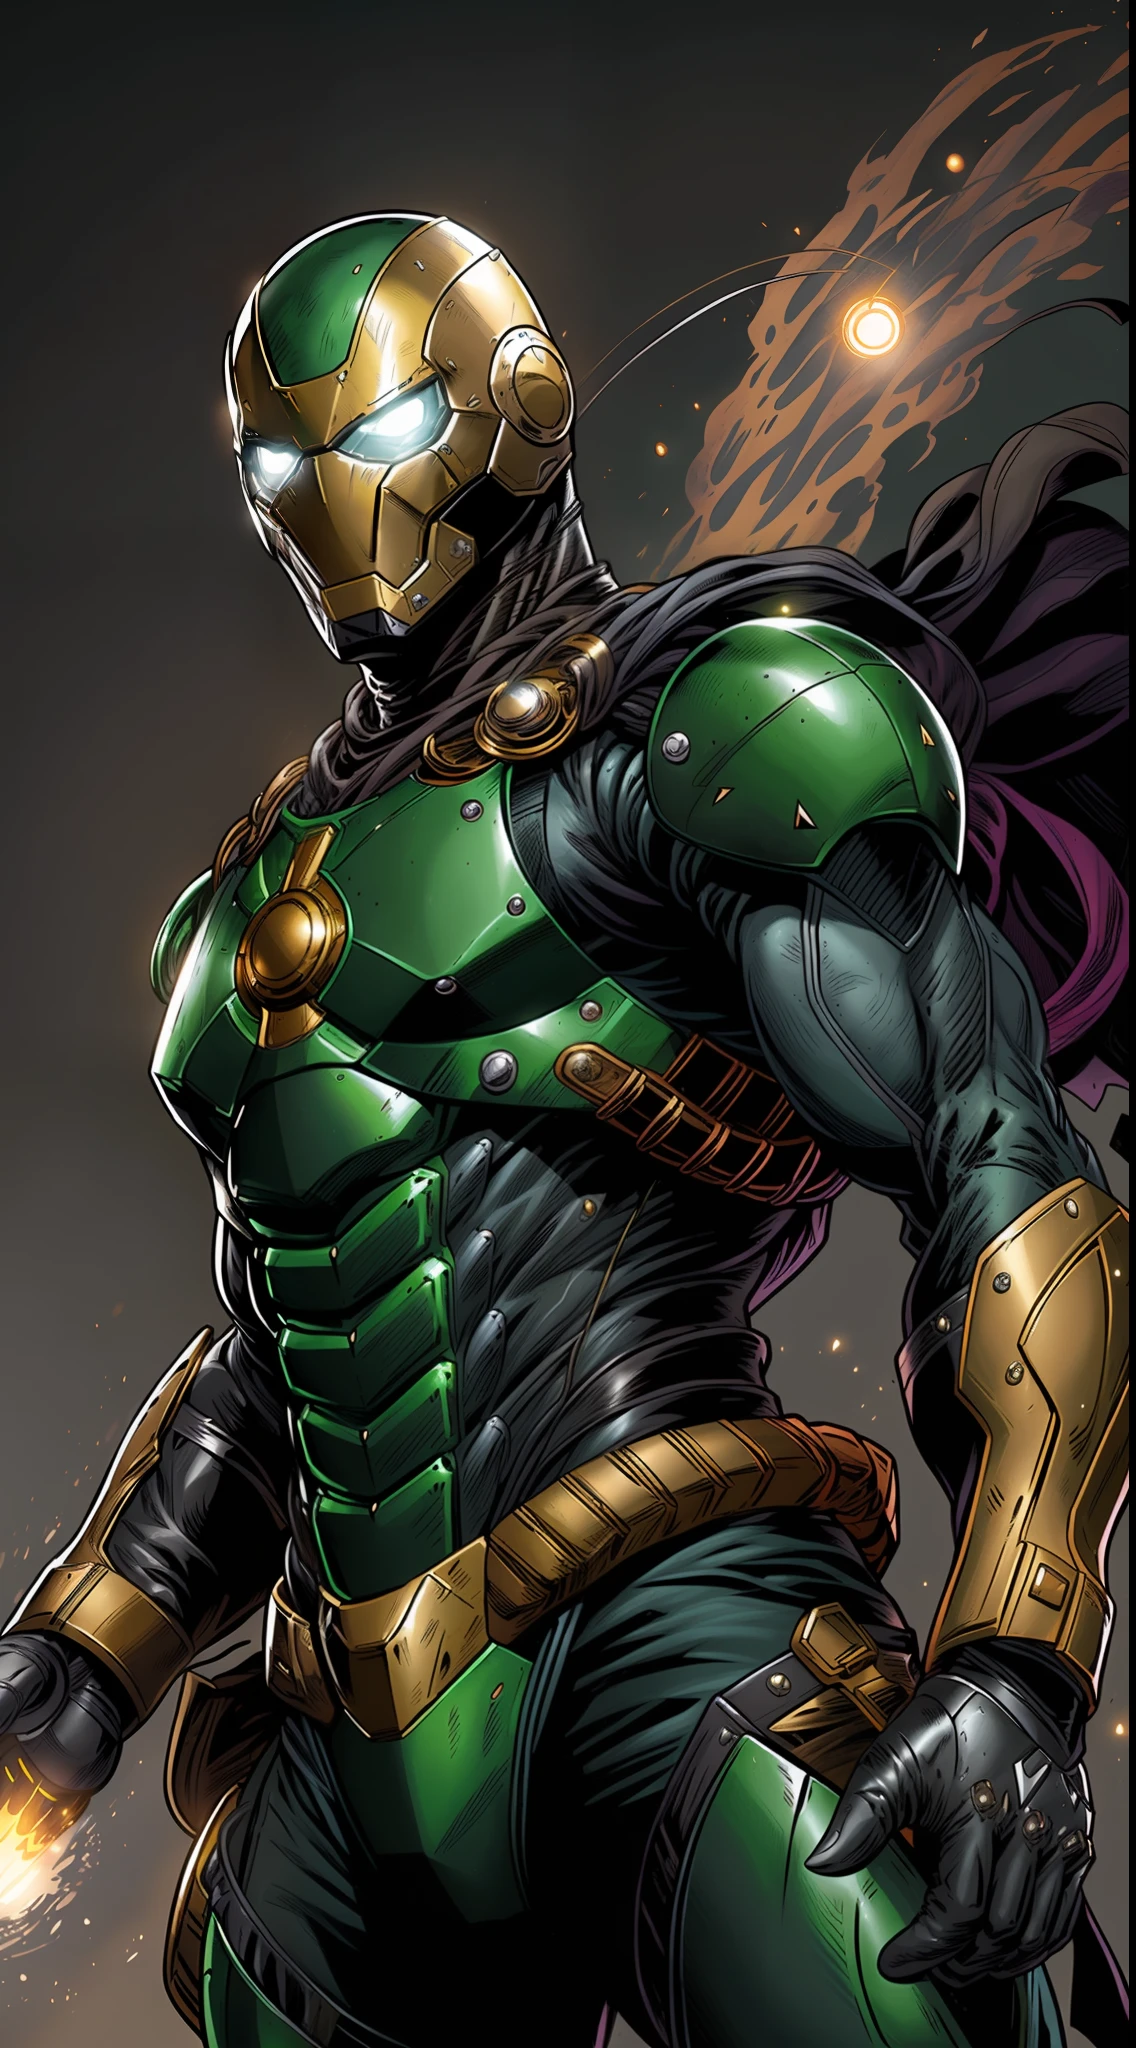 Avengers iron man styles green armor